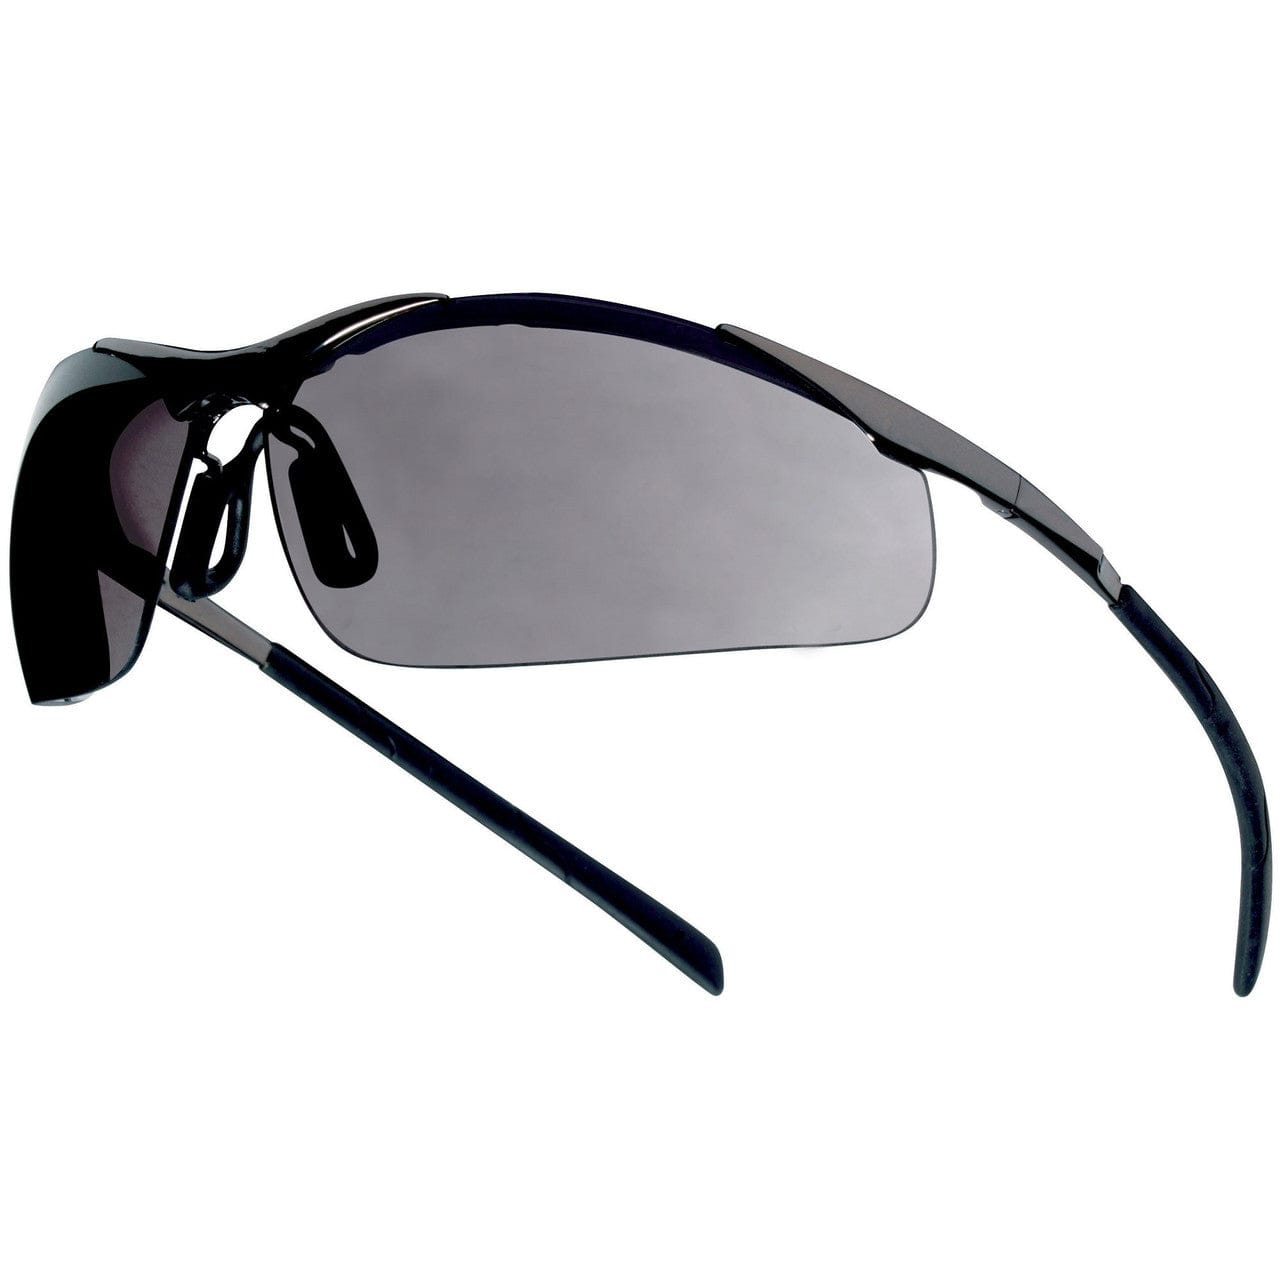 Bolle Contour Metal Safety Glasses Smoke Anti-Fog Lens